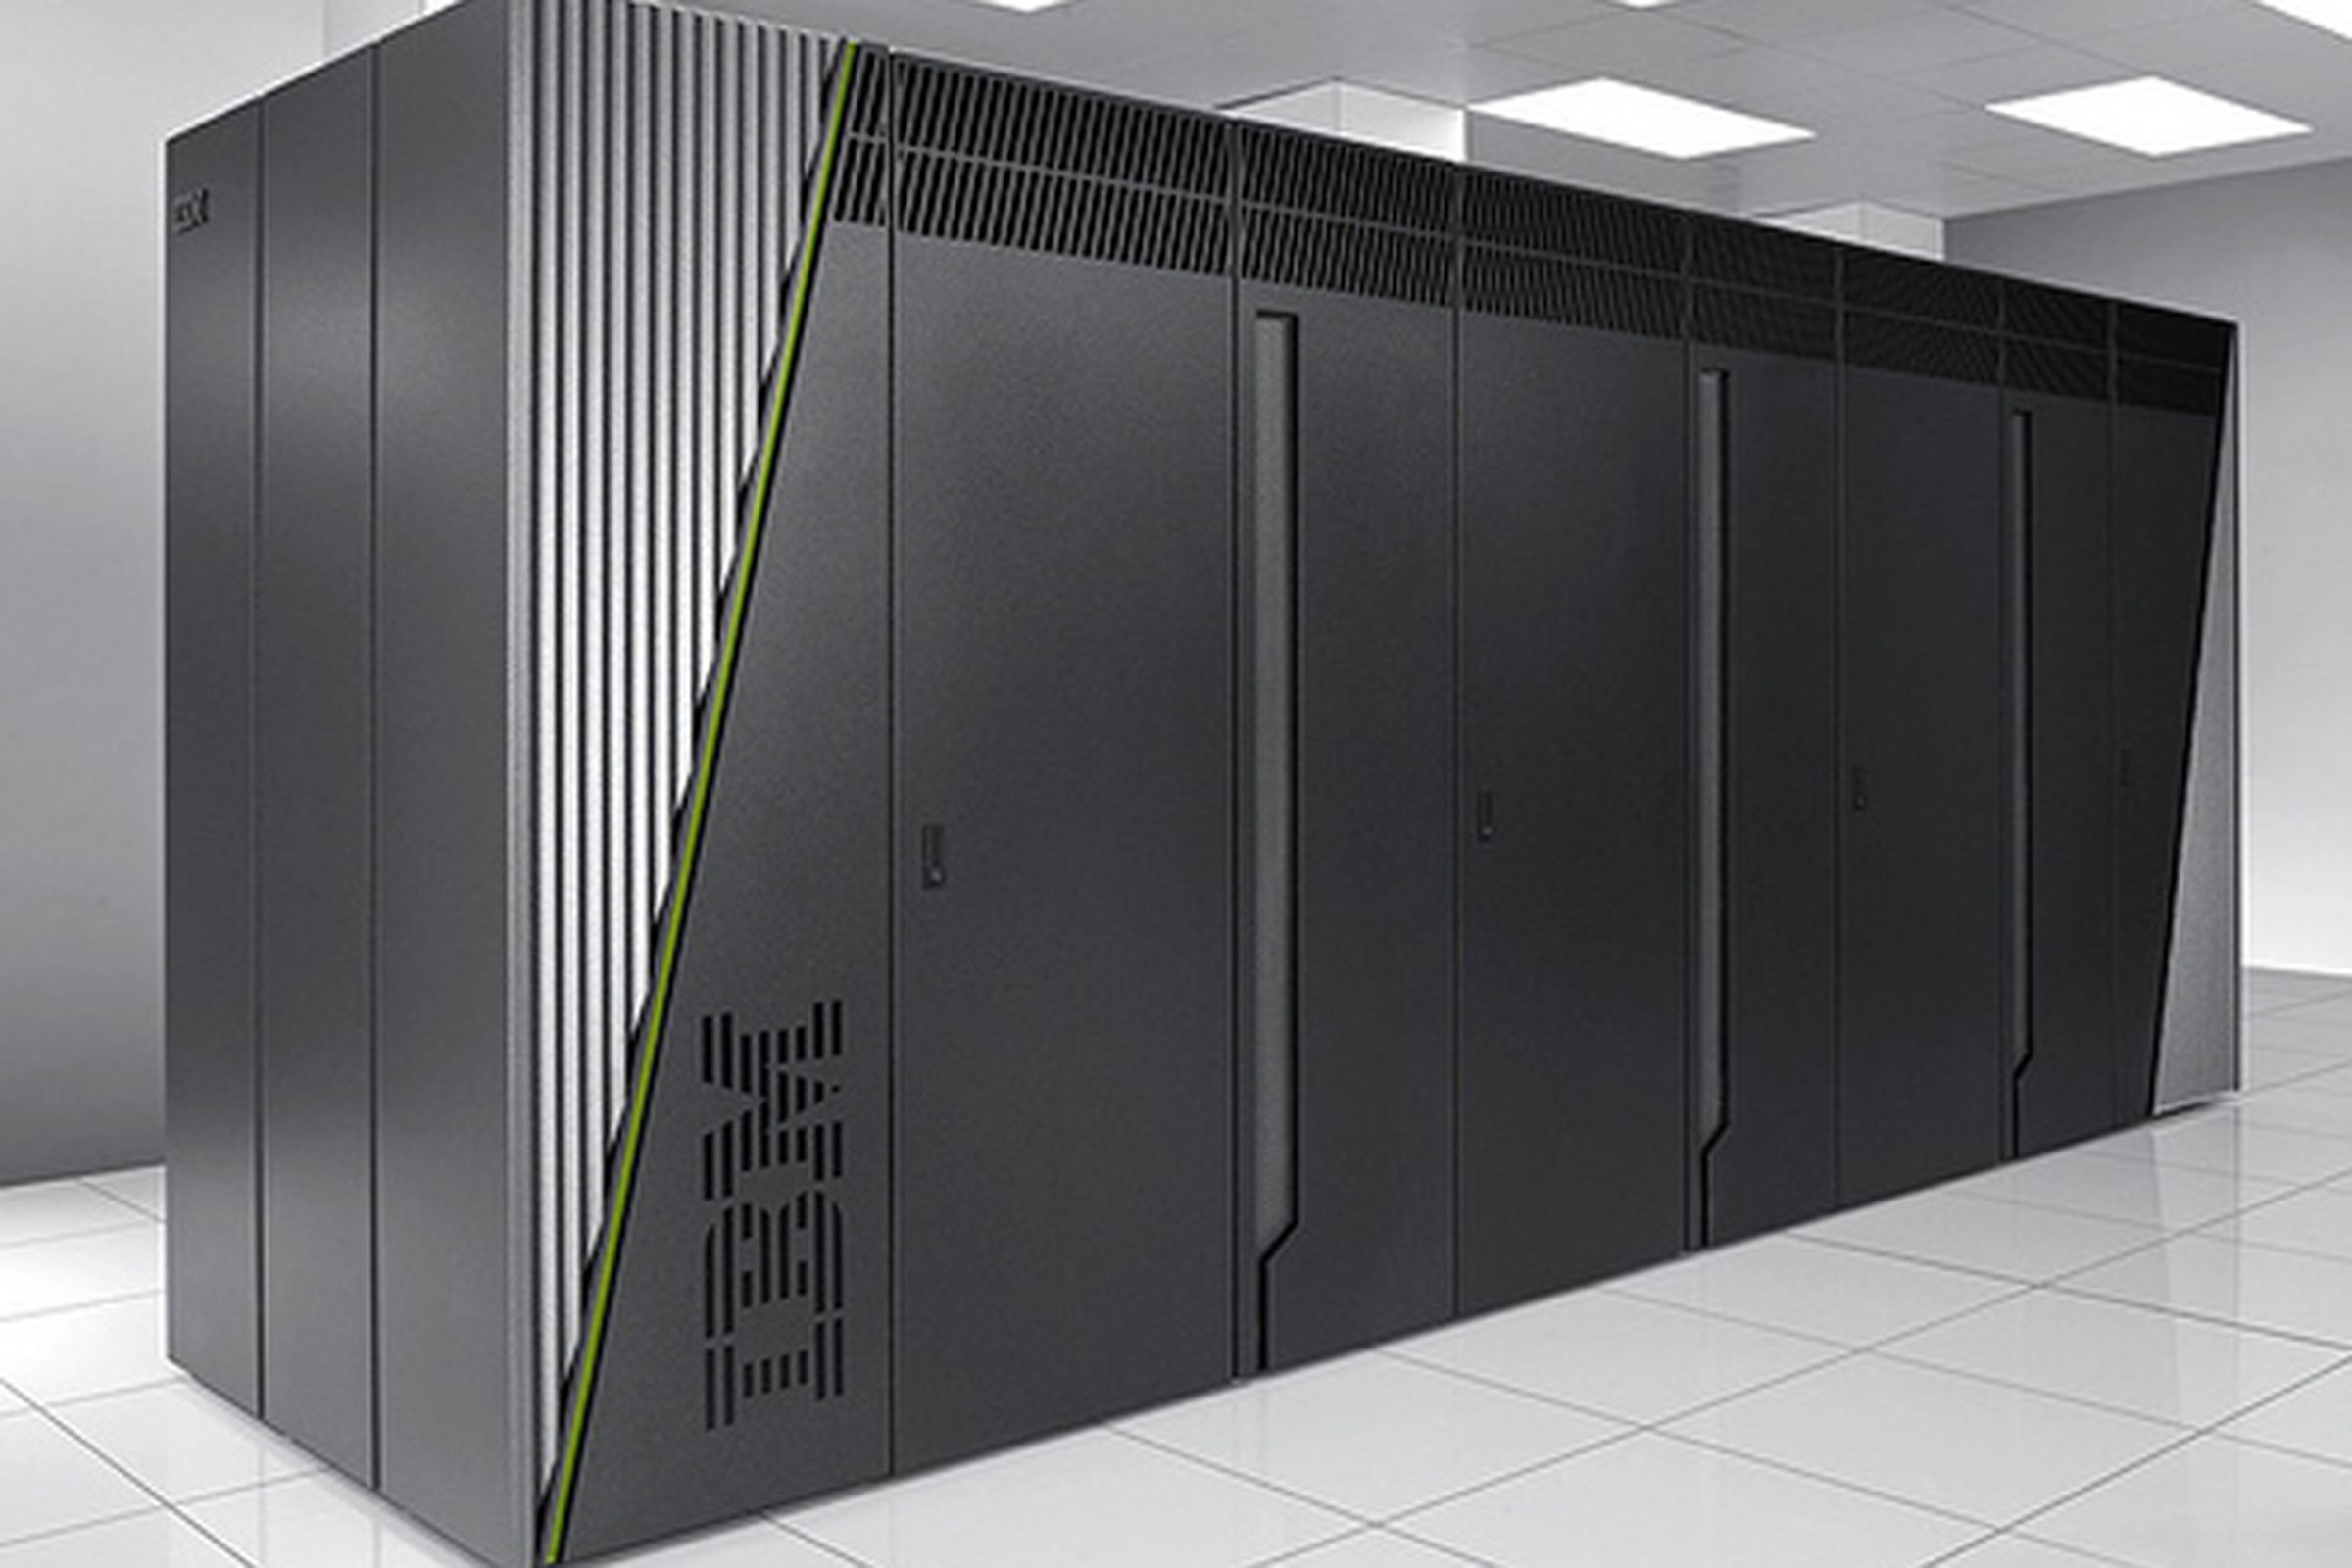 sequoia supercomputer